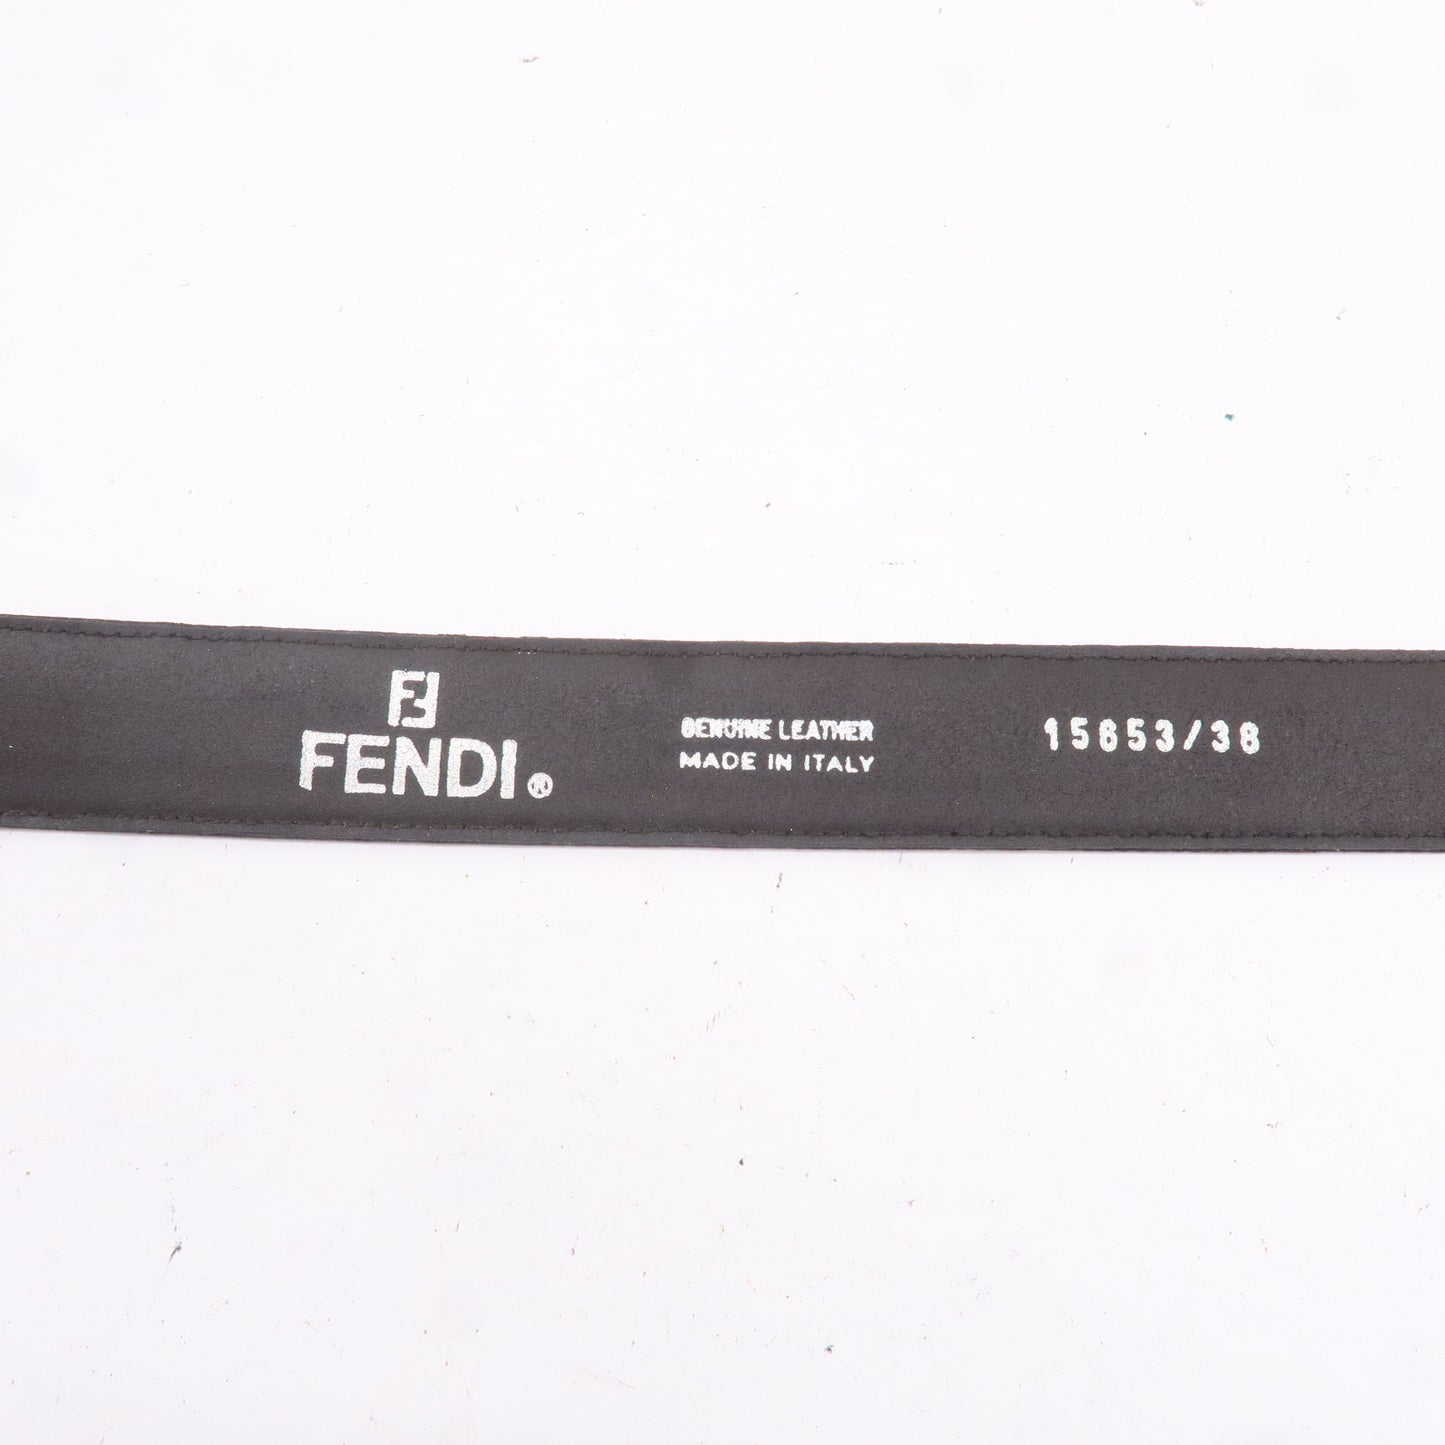 FENDI Zucca Canvas Leather Belt 38 Brwon Black 15653